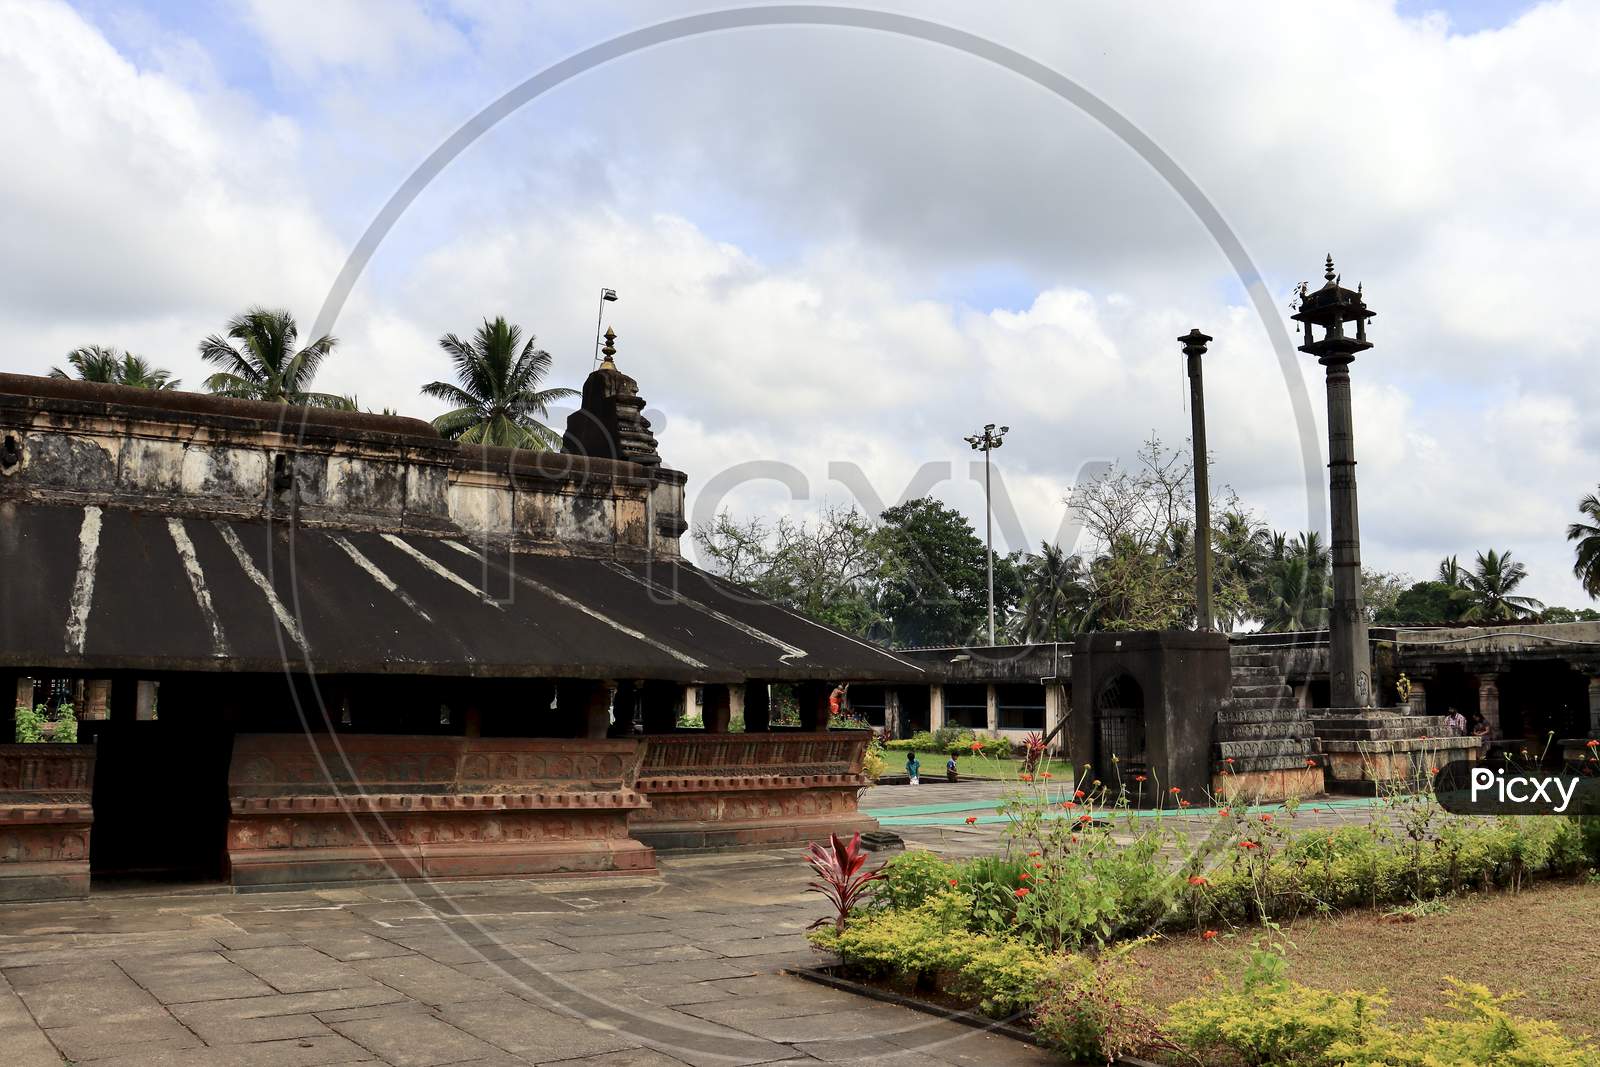 The Lord Madhukeshwara Temple